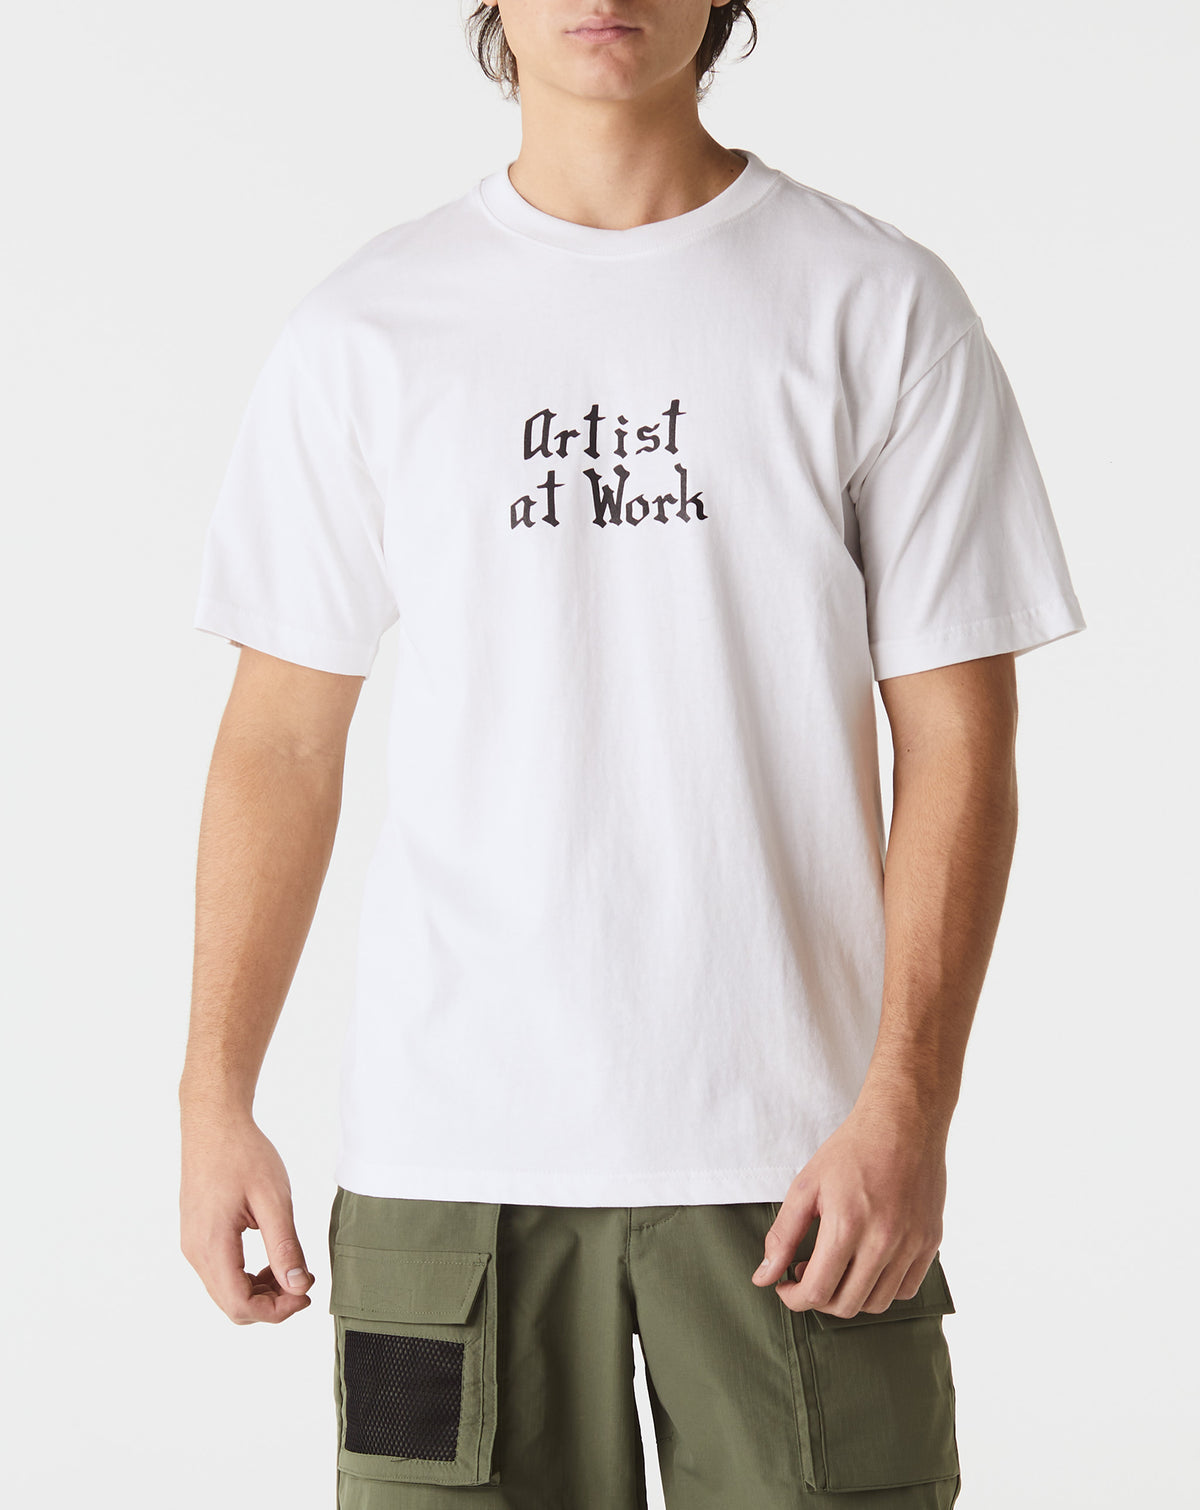 Market Artist At Work T-Shirt - Rule of Next Apparel